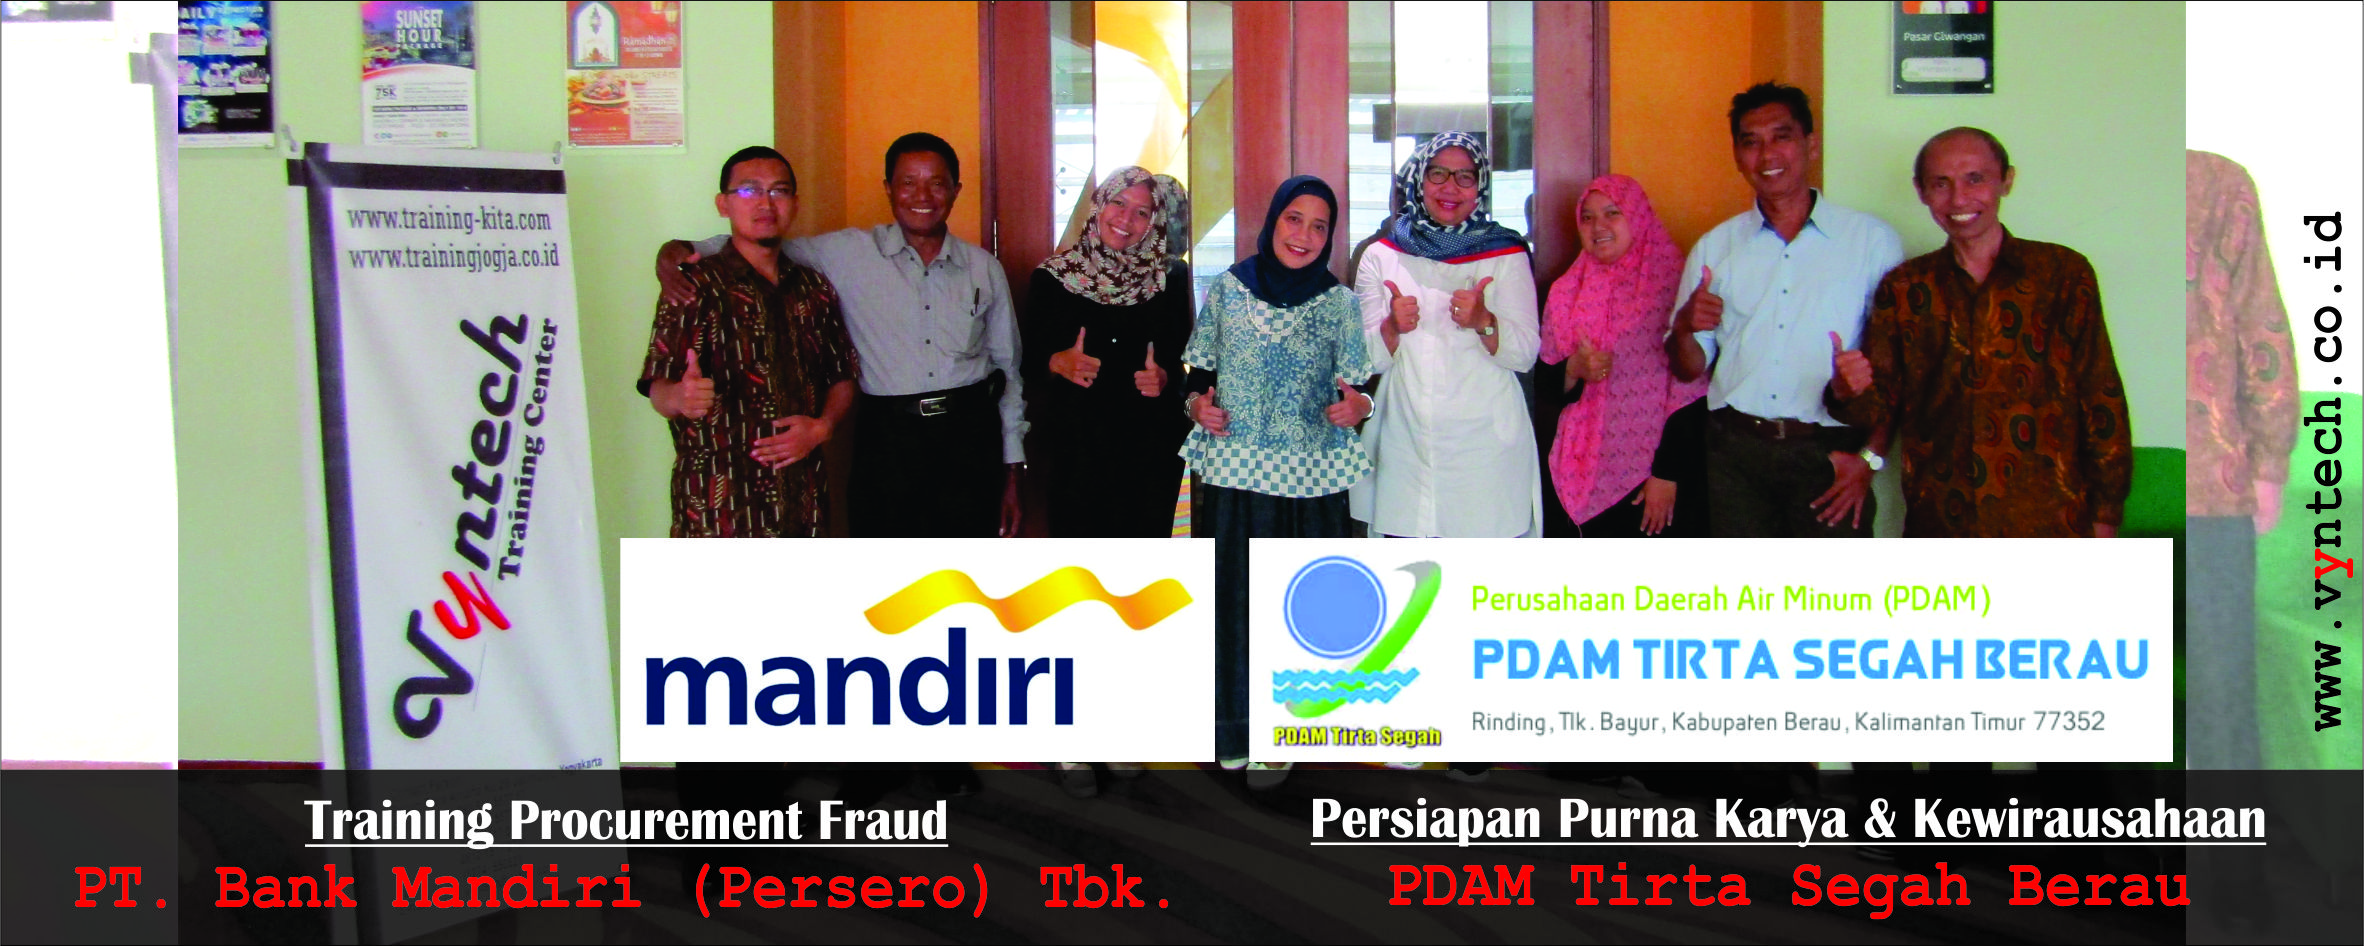 20170522 Training Procurement Fraud (PT Bank Mandiri Persero Tbk) Purnakarya & Kewirausahaan (PDAM Tirta Segah Berau)